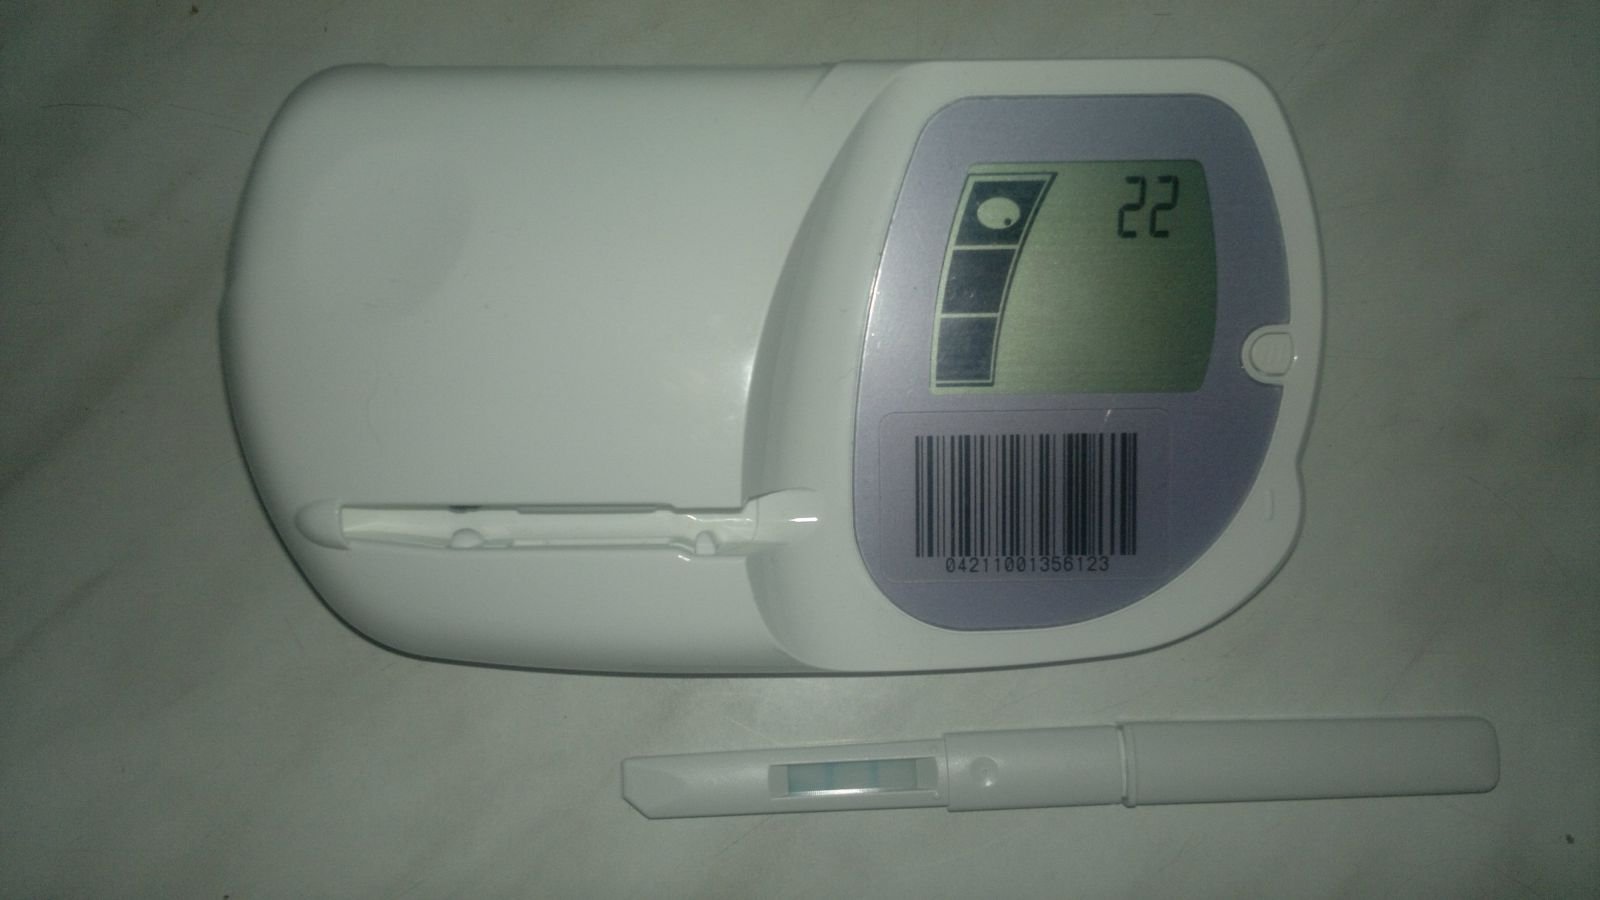 clearblue fertility monitor на 21 ДЦ